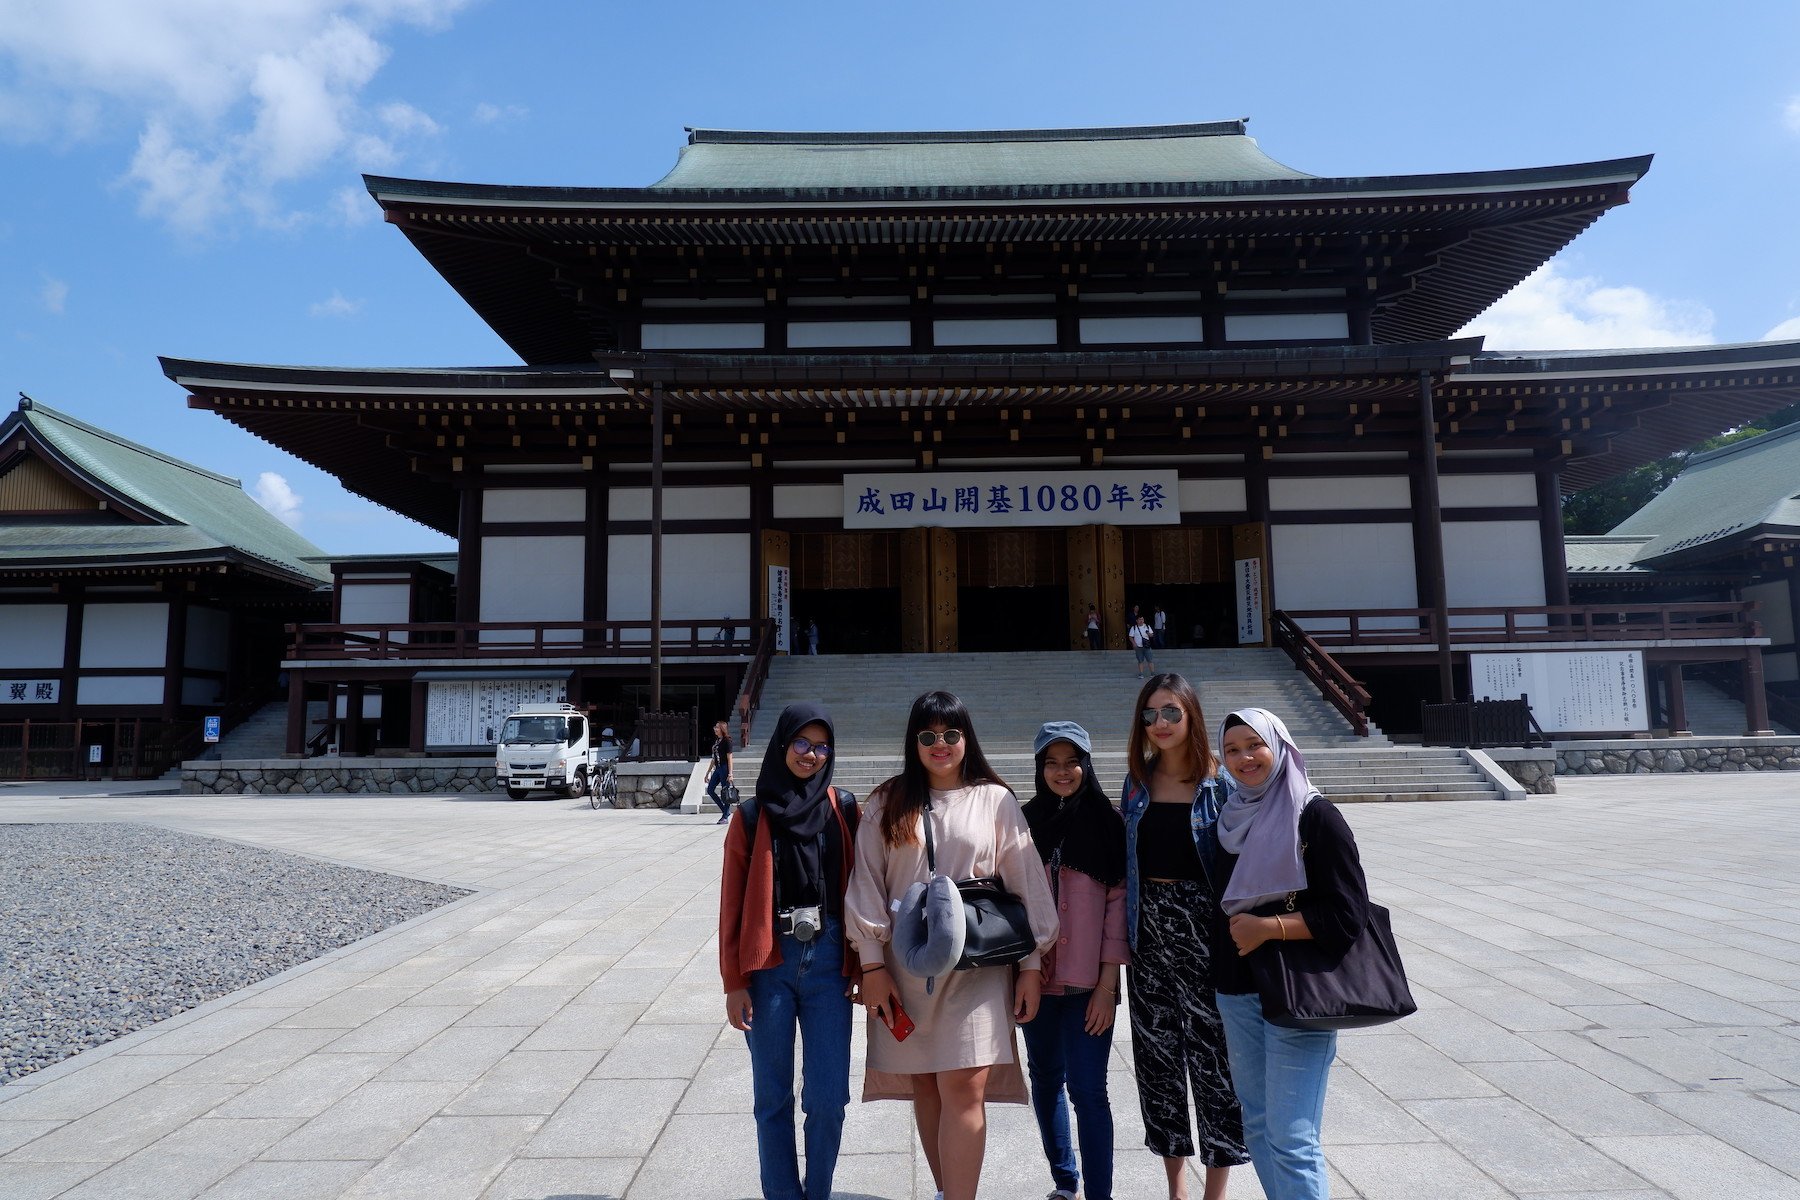 Japan Global Study Trip 61 